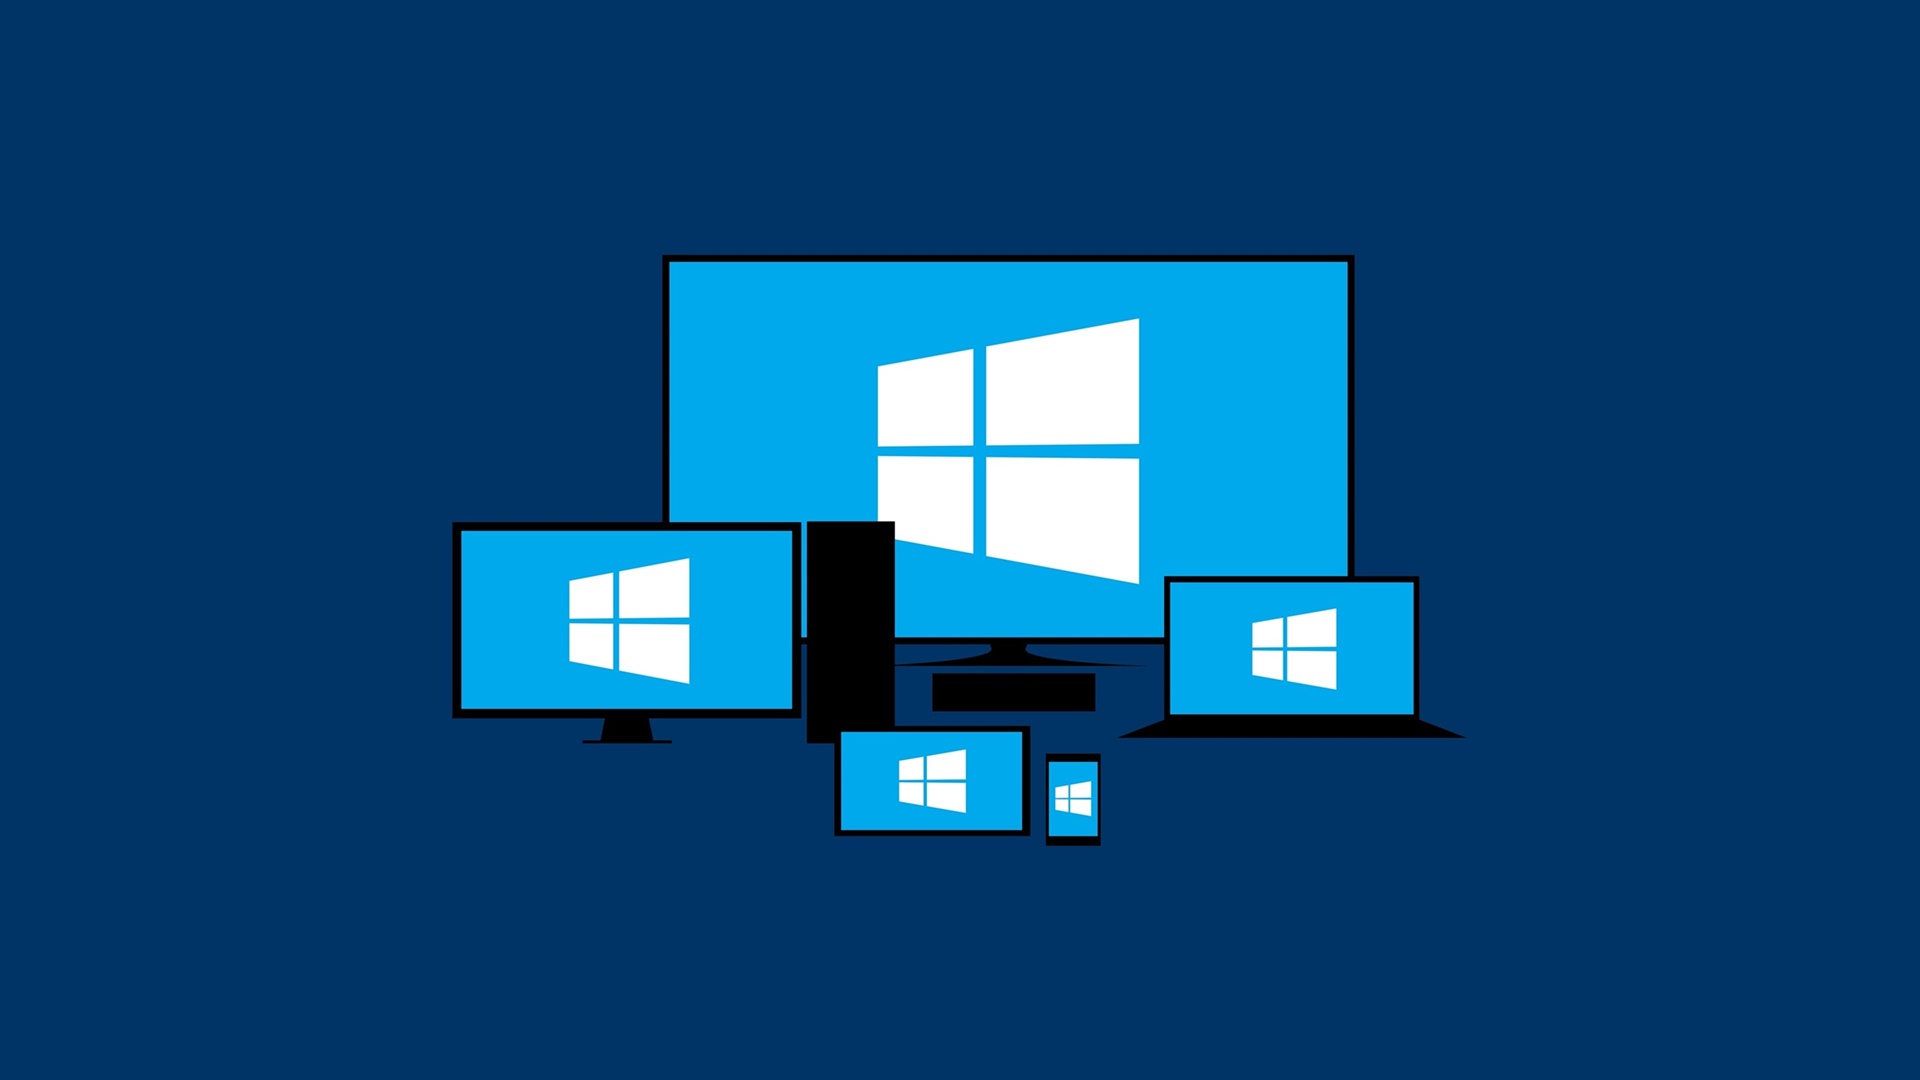 Windows 10 Wallpaper Pack by roddiow on DeviantArt